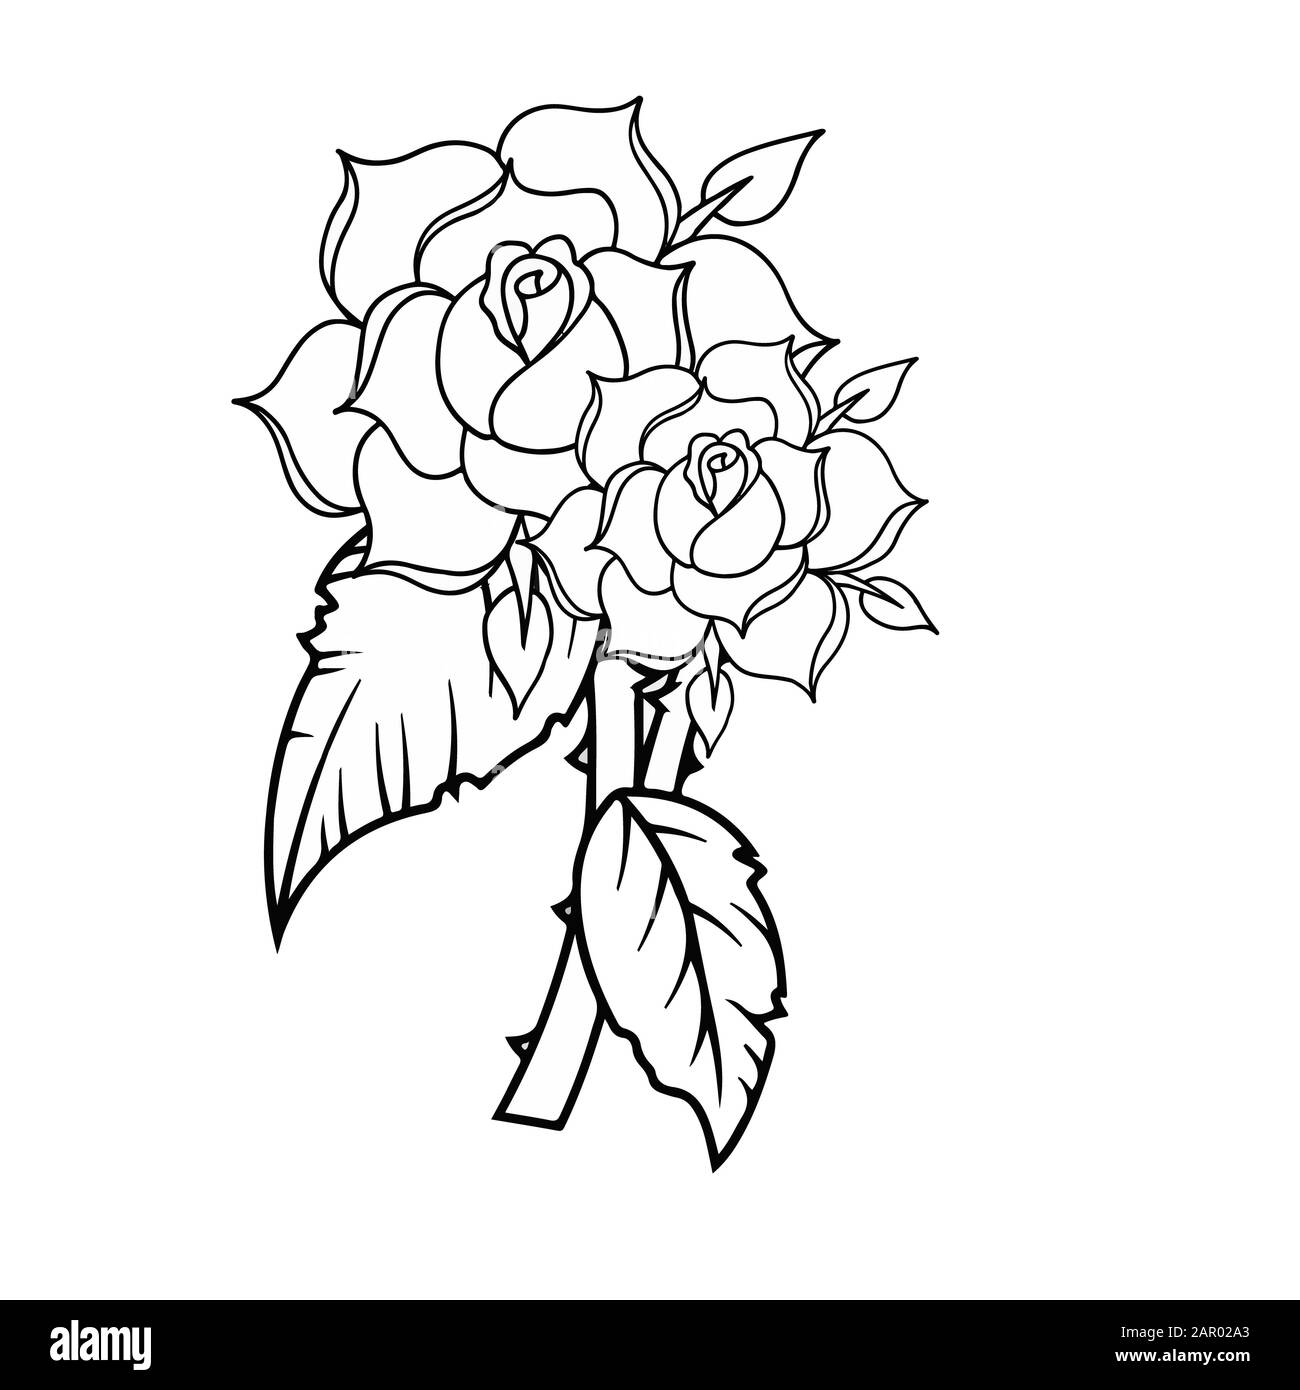 Drawing rose flower tree artwork outline Stock Photo - Alamy